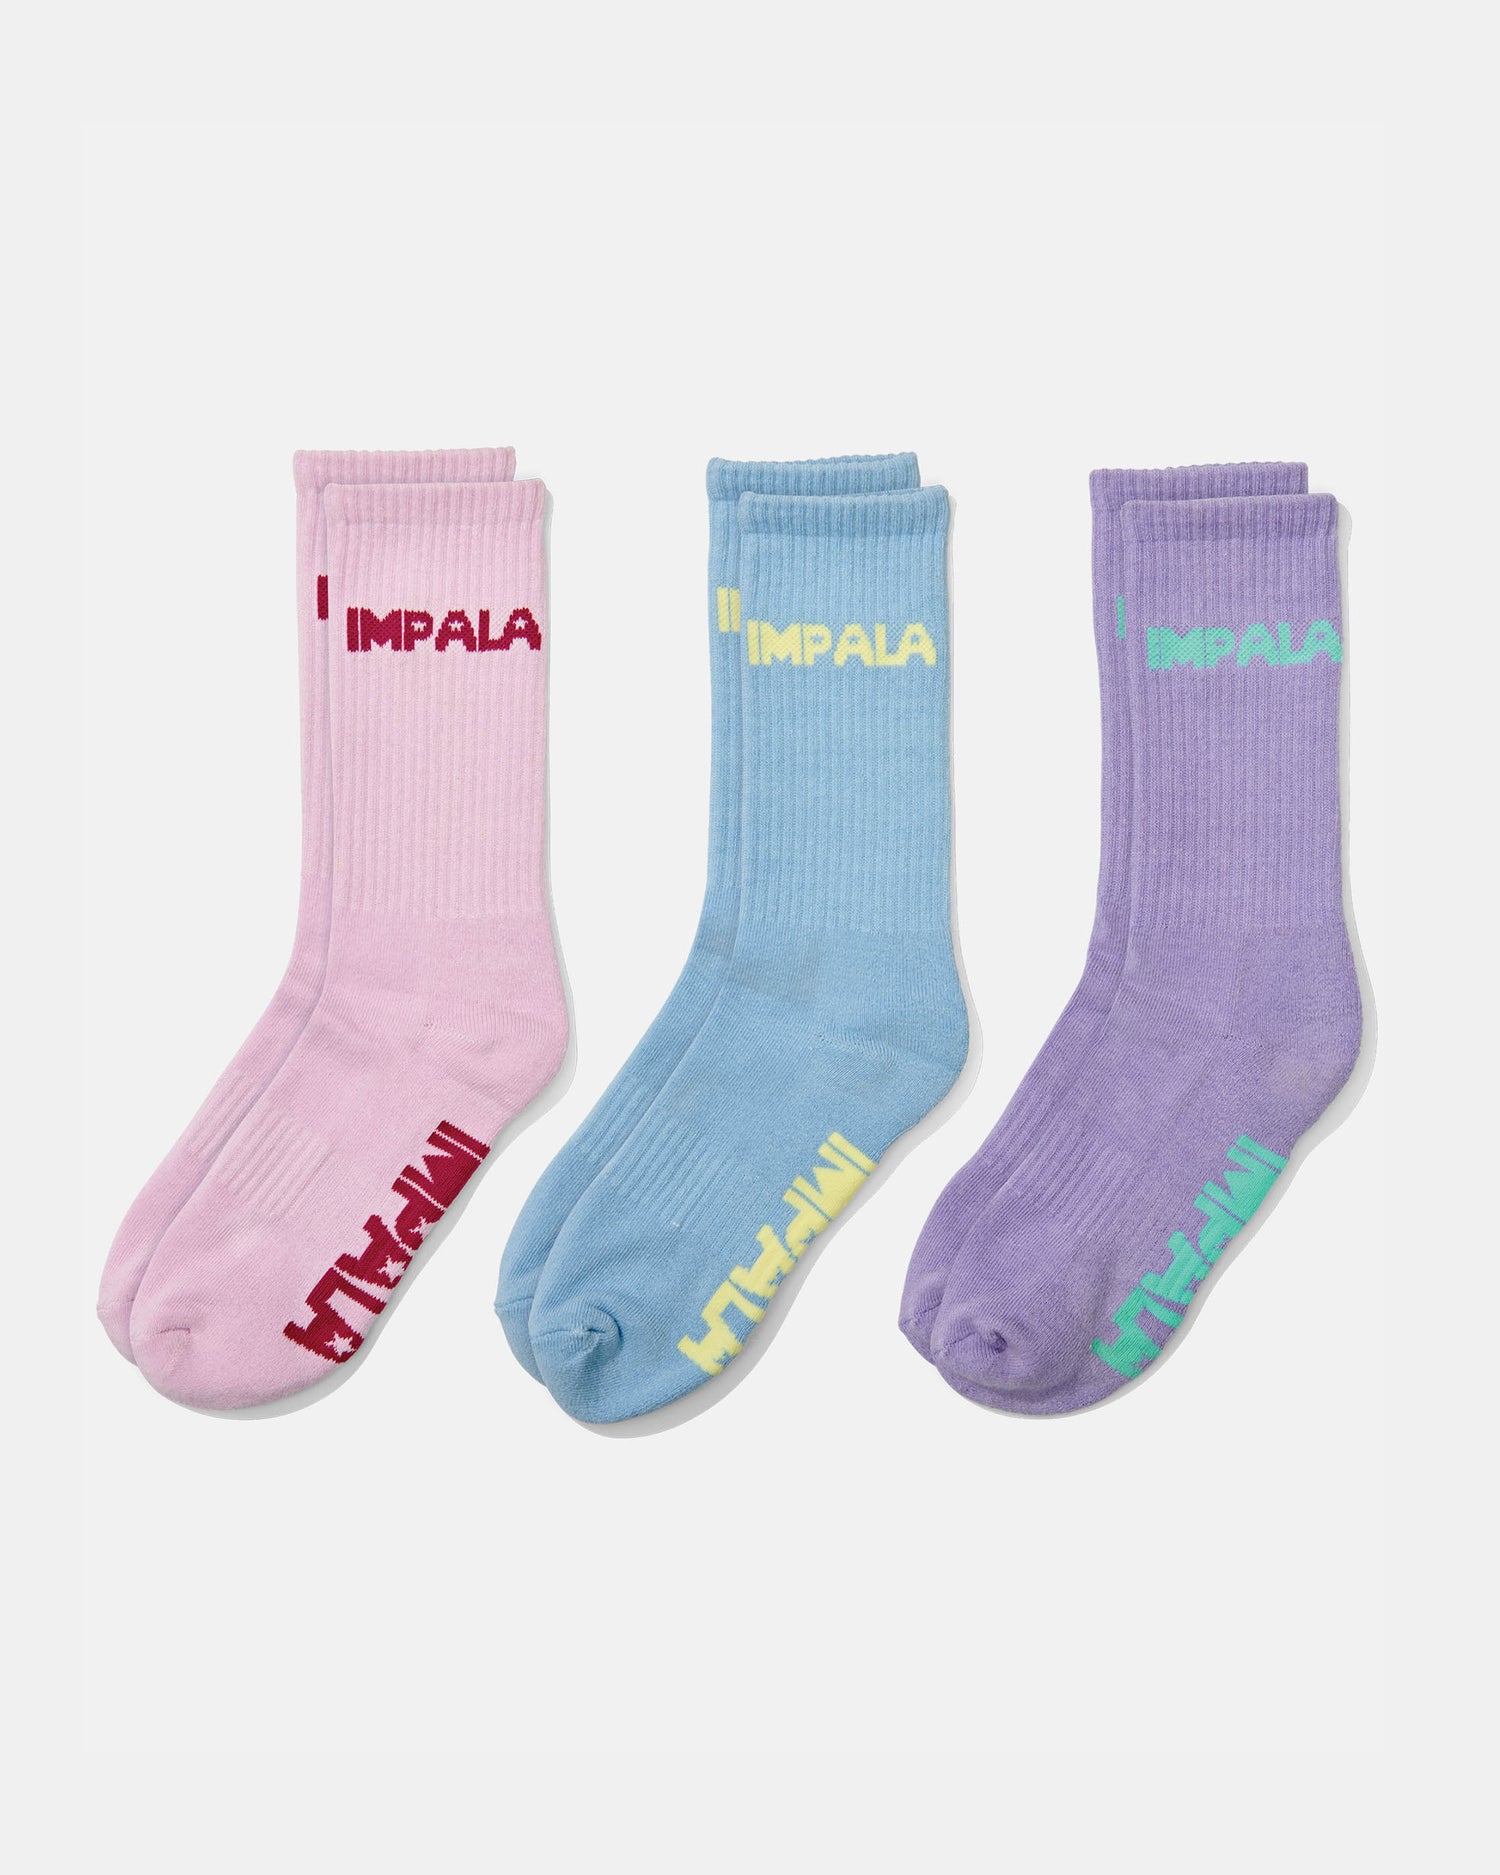 3 color options included in Impala Skate Sock 3pk - Pastel